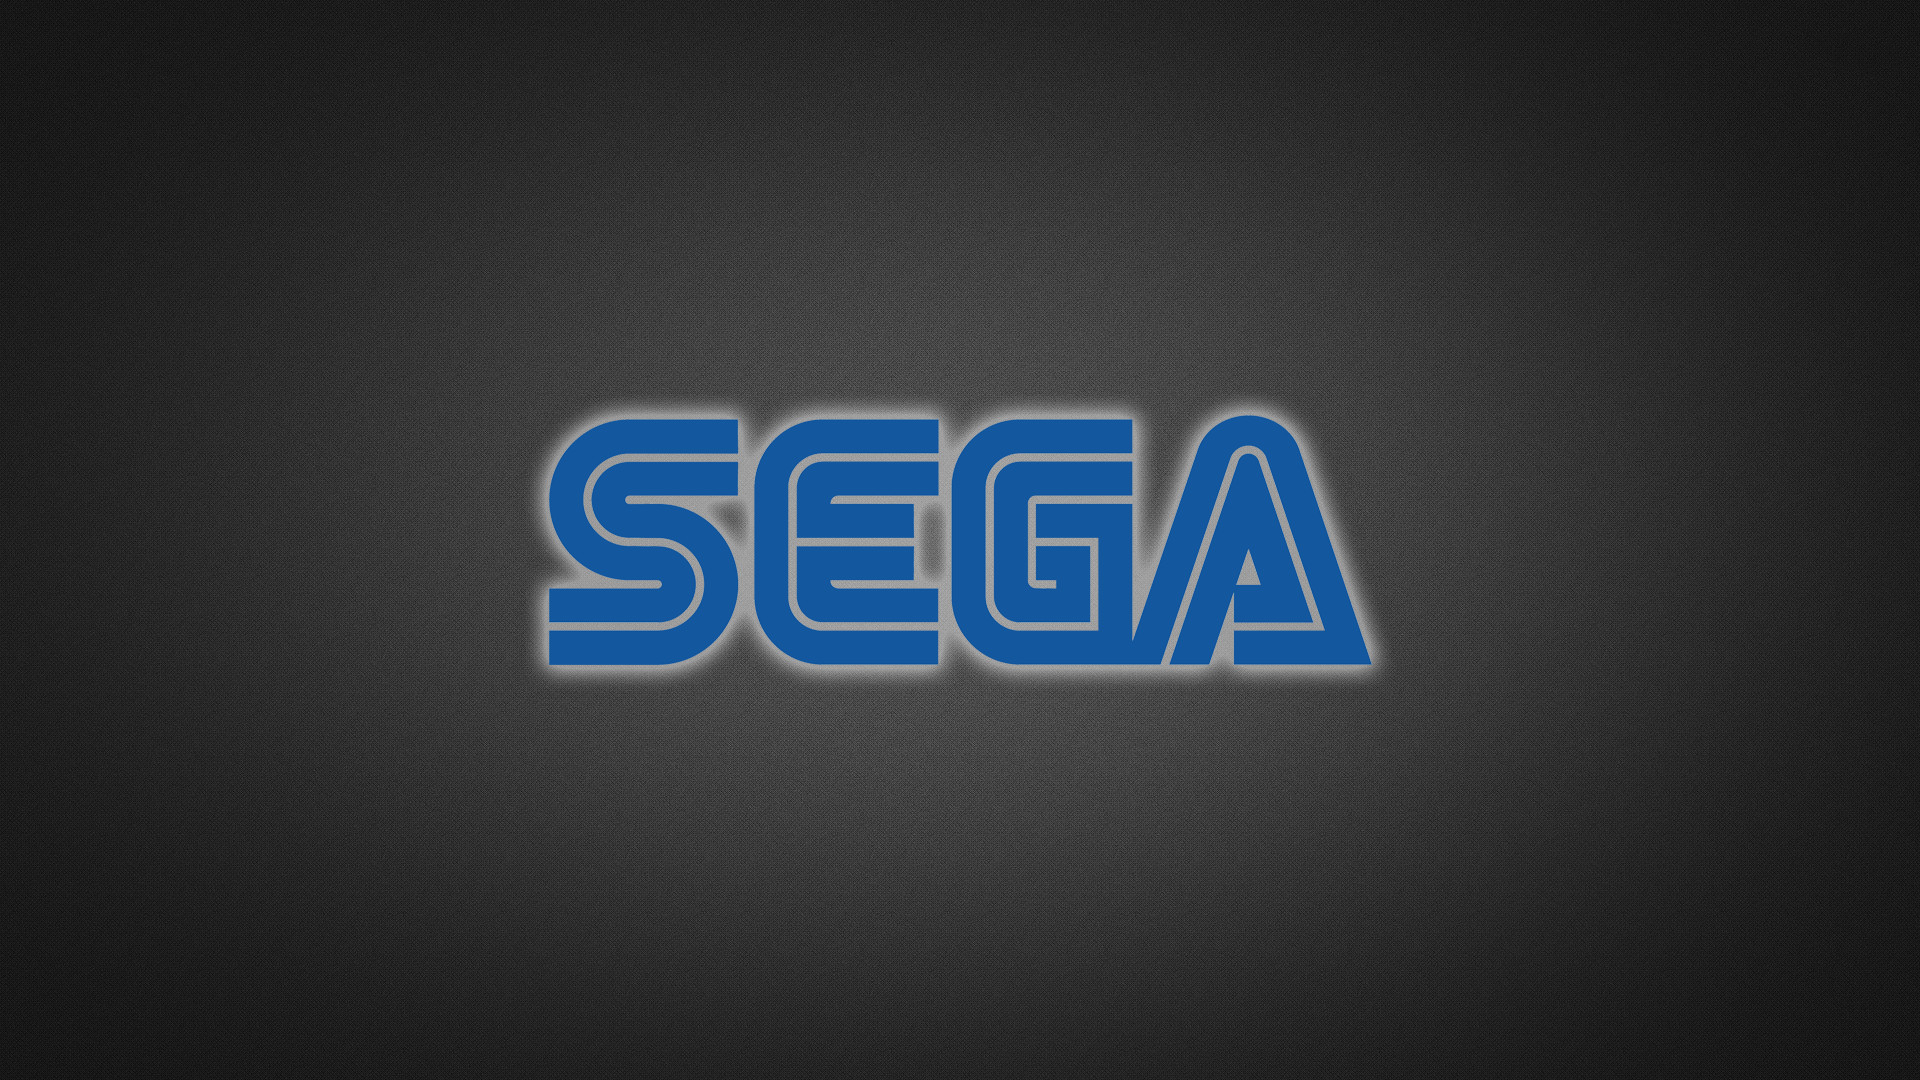 1920x1080 Sega Wallpaper Sega logo wallpaper (1920 x